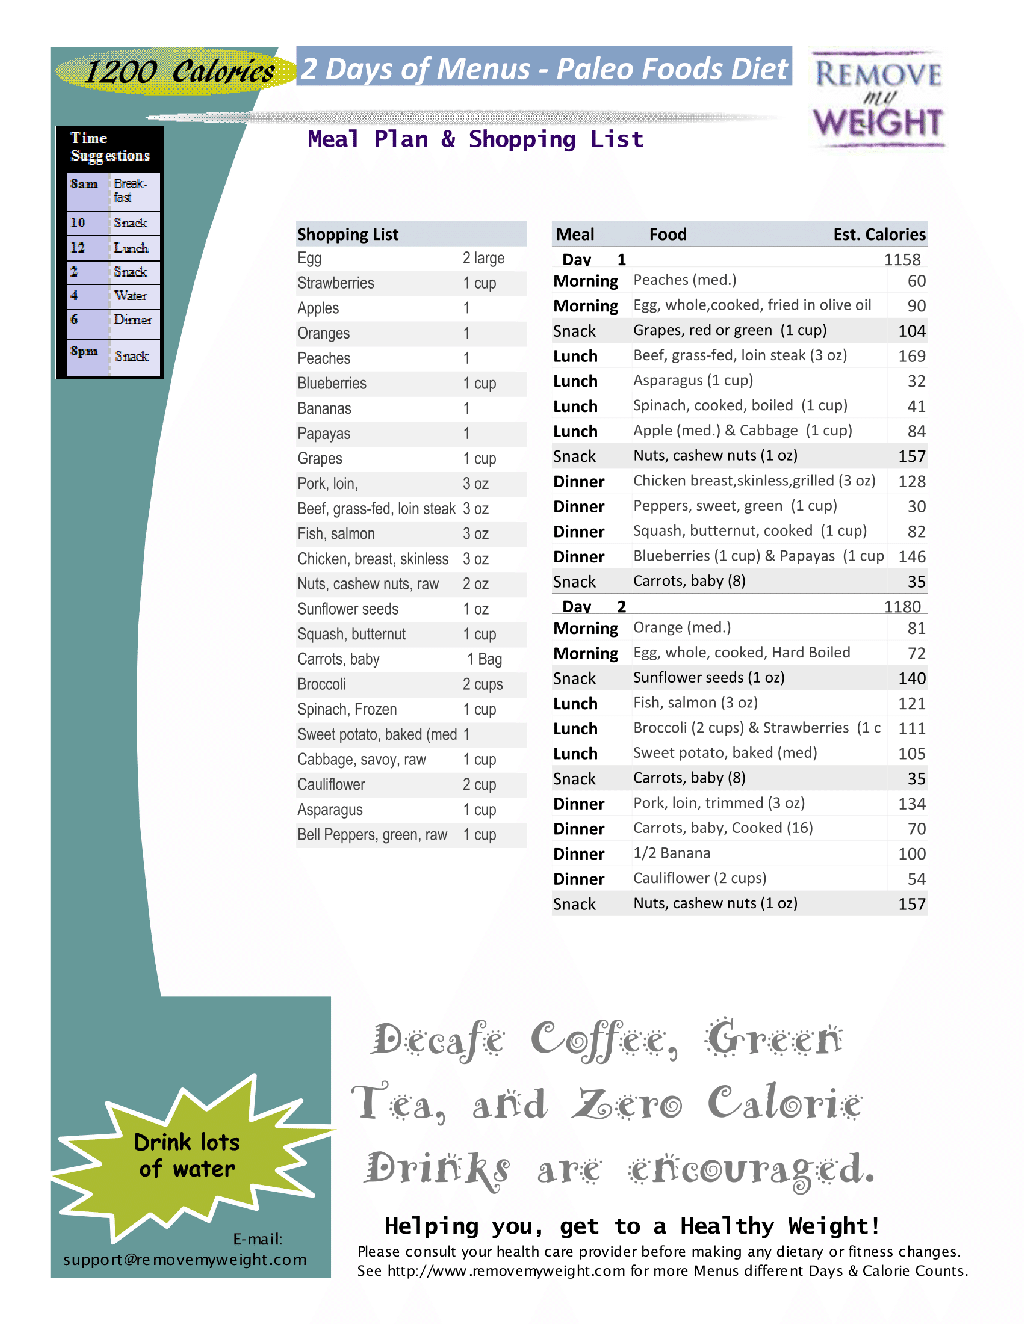 paleo-diet-menu-plan-7-days-1200-calories-with-shopping-list